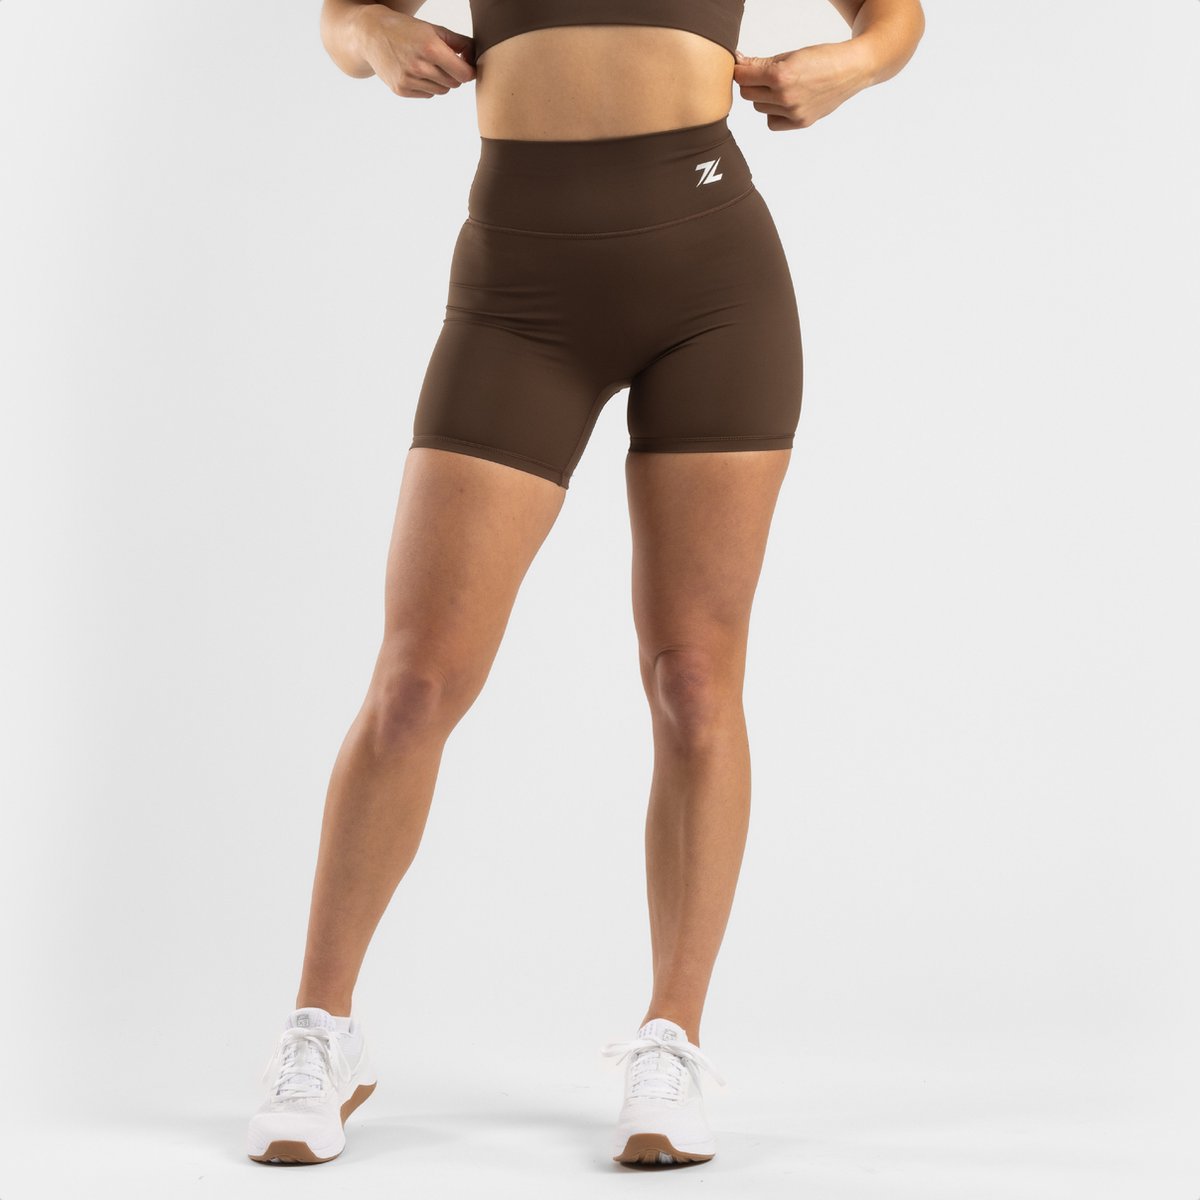 ZEUZ Korte Sport Legging Dames High Waist - Sportkleding & Sportlegging Squat Proof - Fitness & Crossfit - Hardloopbroek, Yoga Broek - 62% Recycled Nylon & 38% Elastaan - Bruin - Maat XL